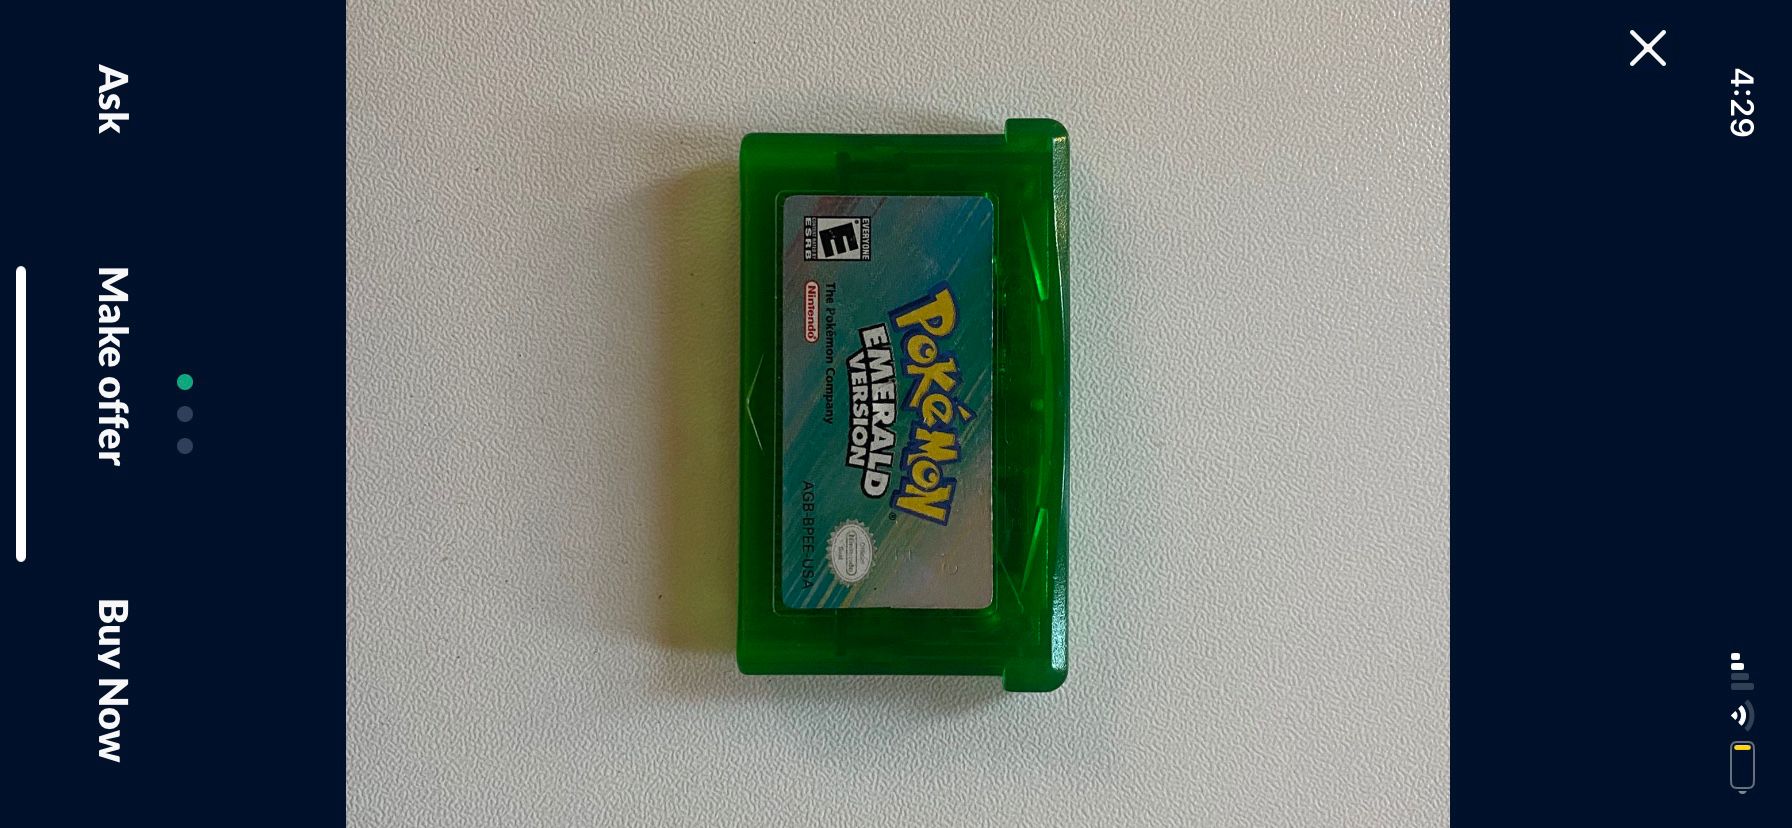 Pokémon Emerald Authentic Game boy Advance